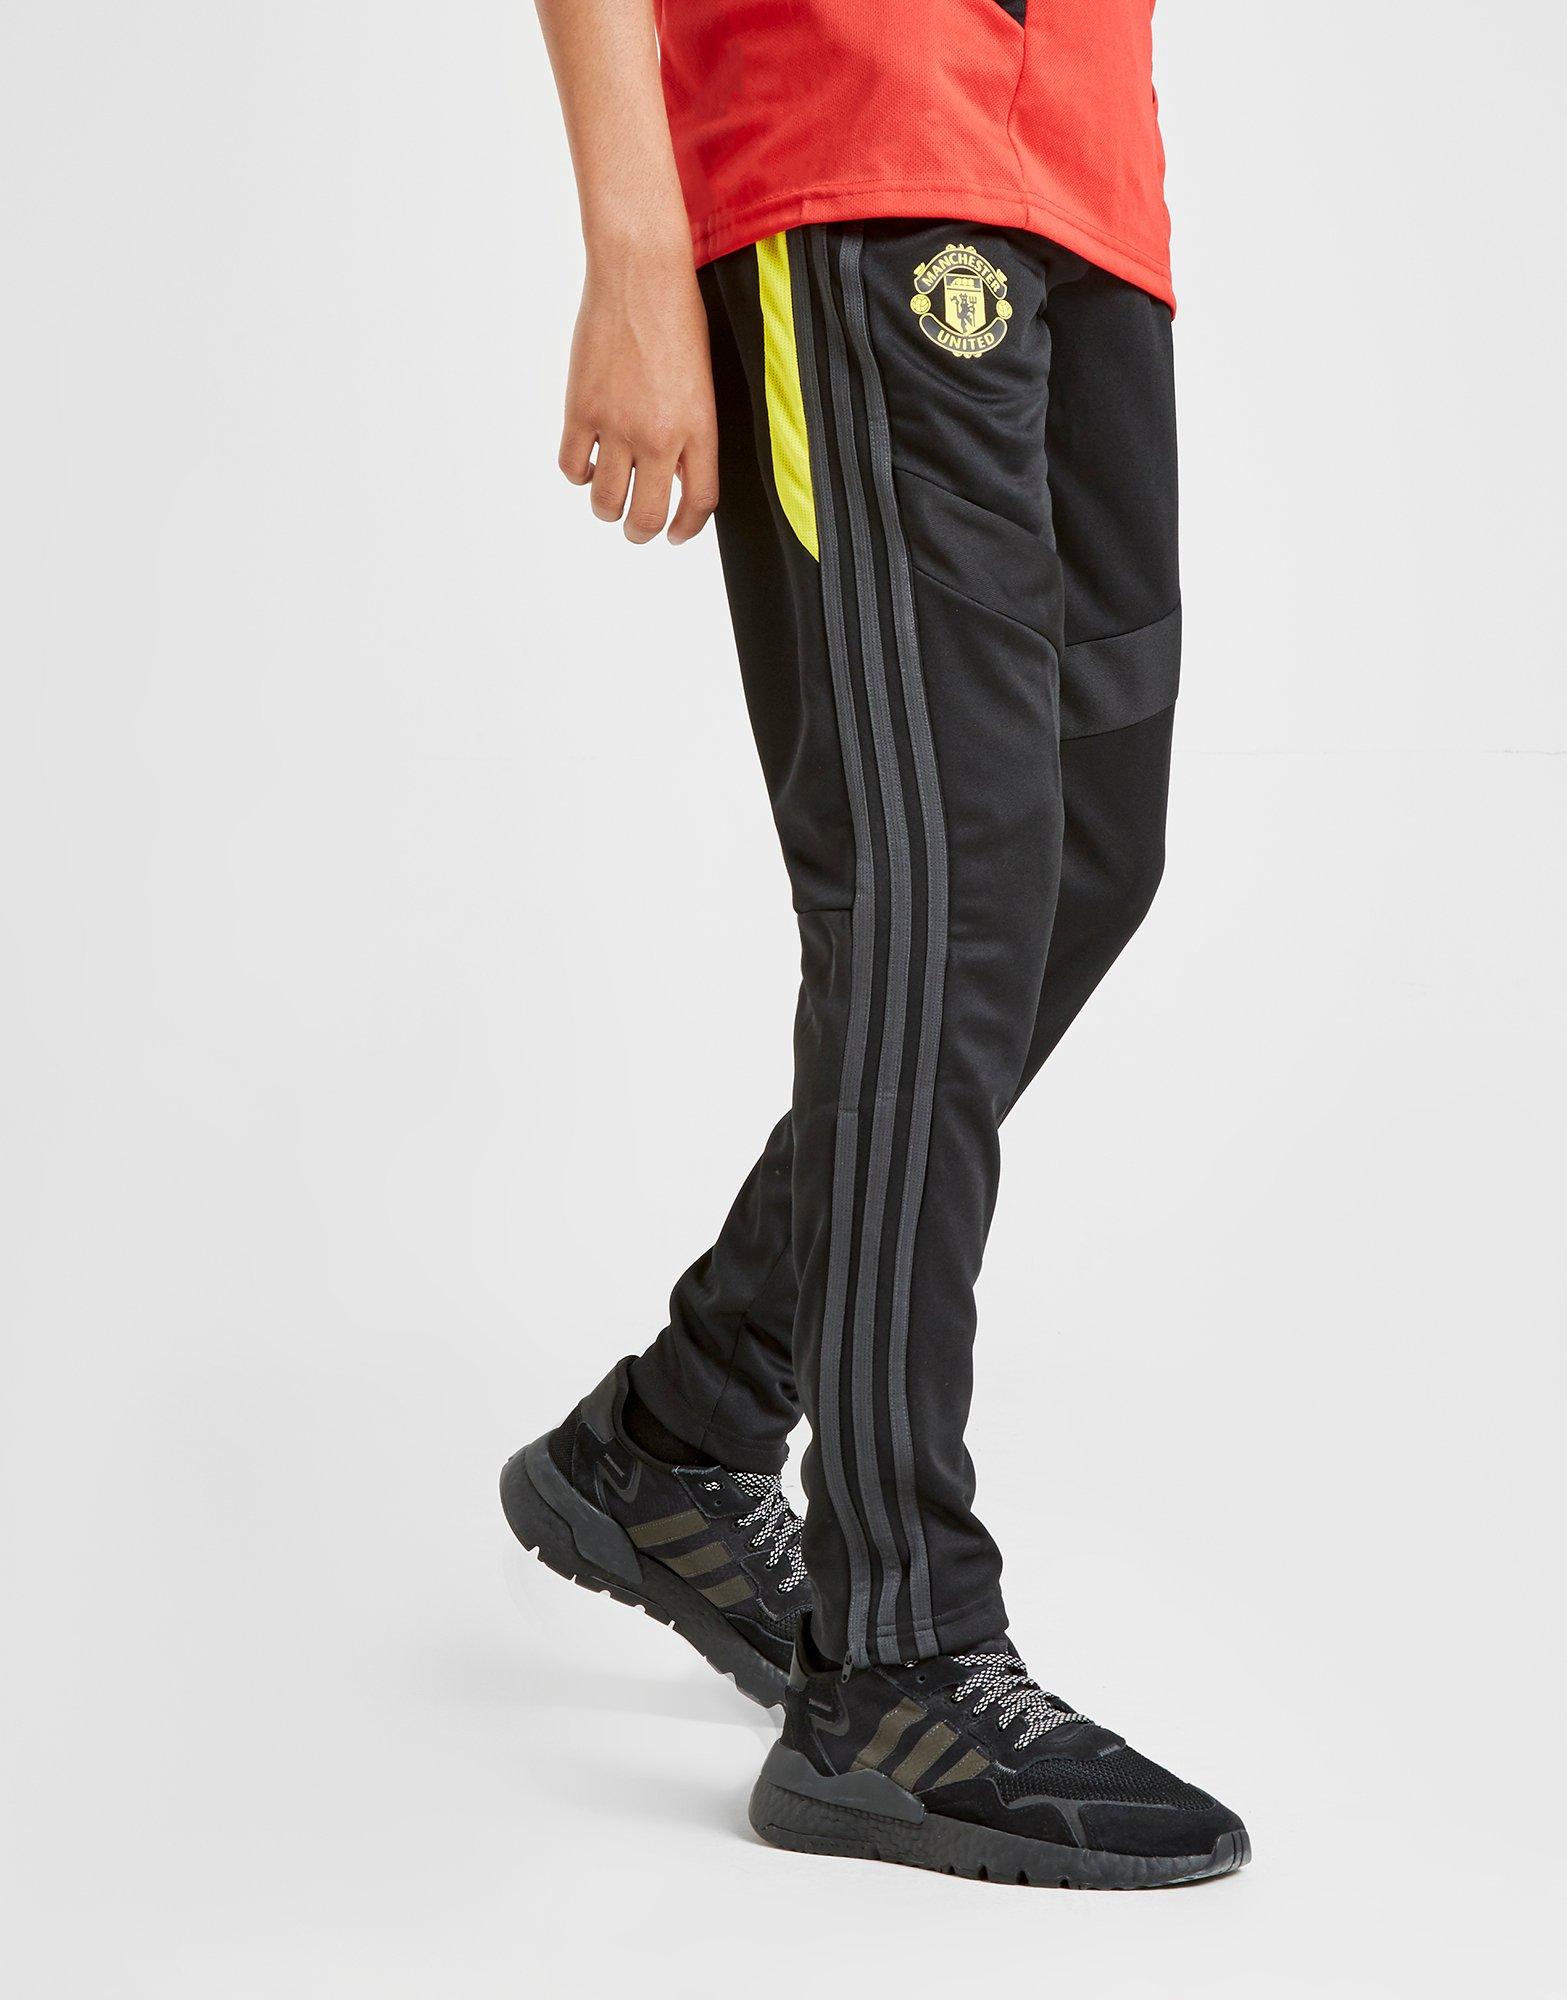 manchester united adidas pants